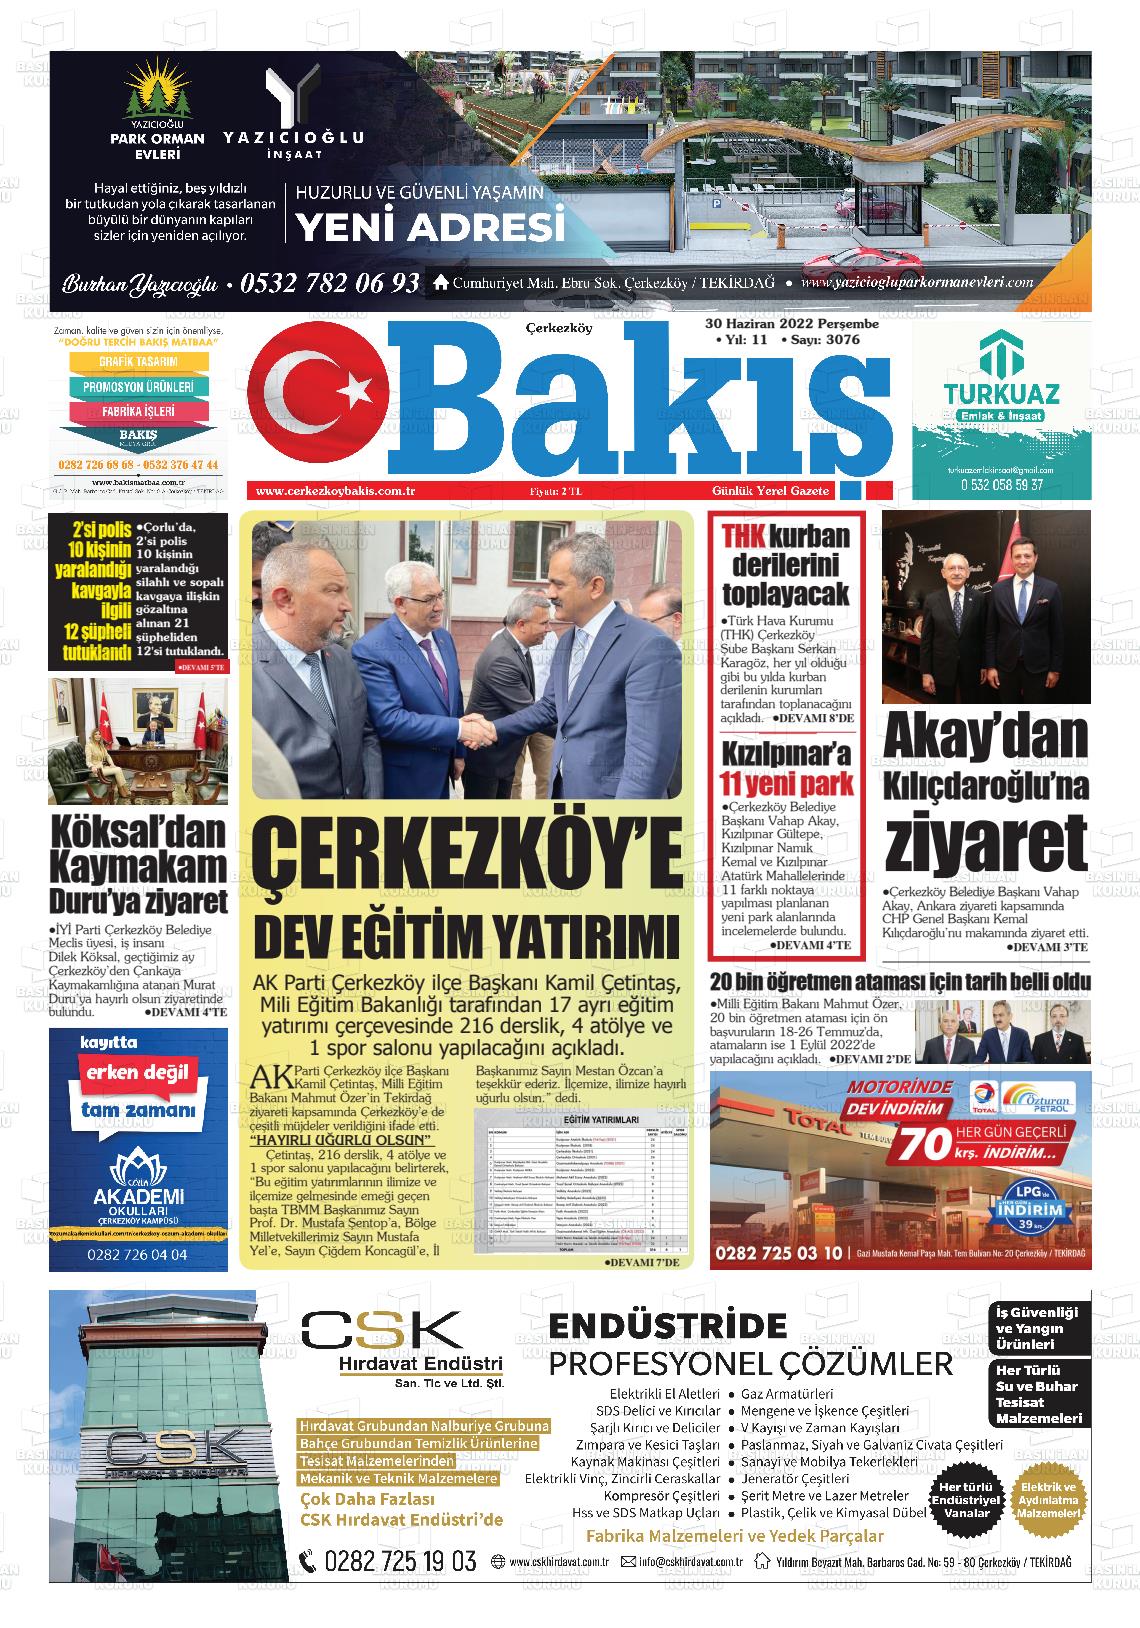 02 Temmuz 2022 Çerkezköy Bakış Gazete Manşeti